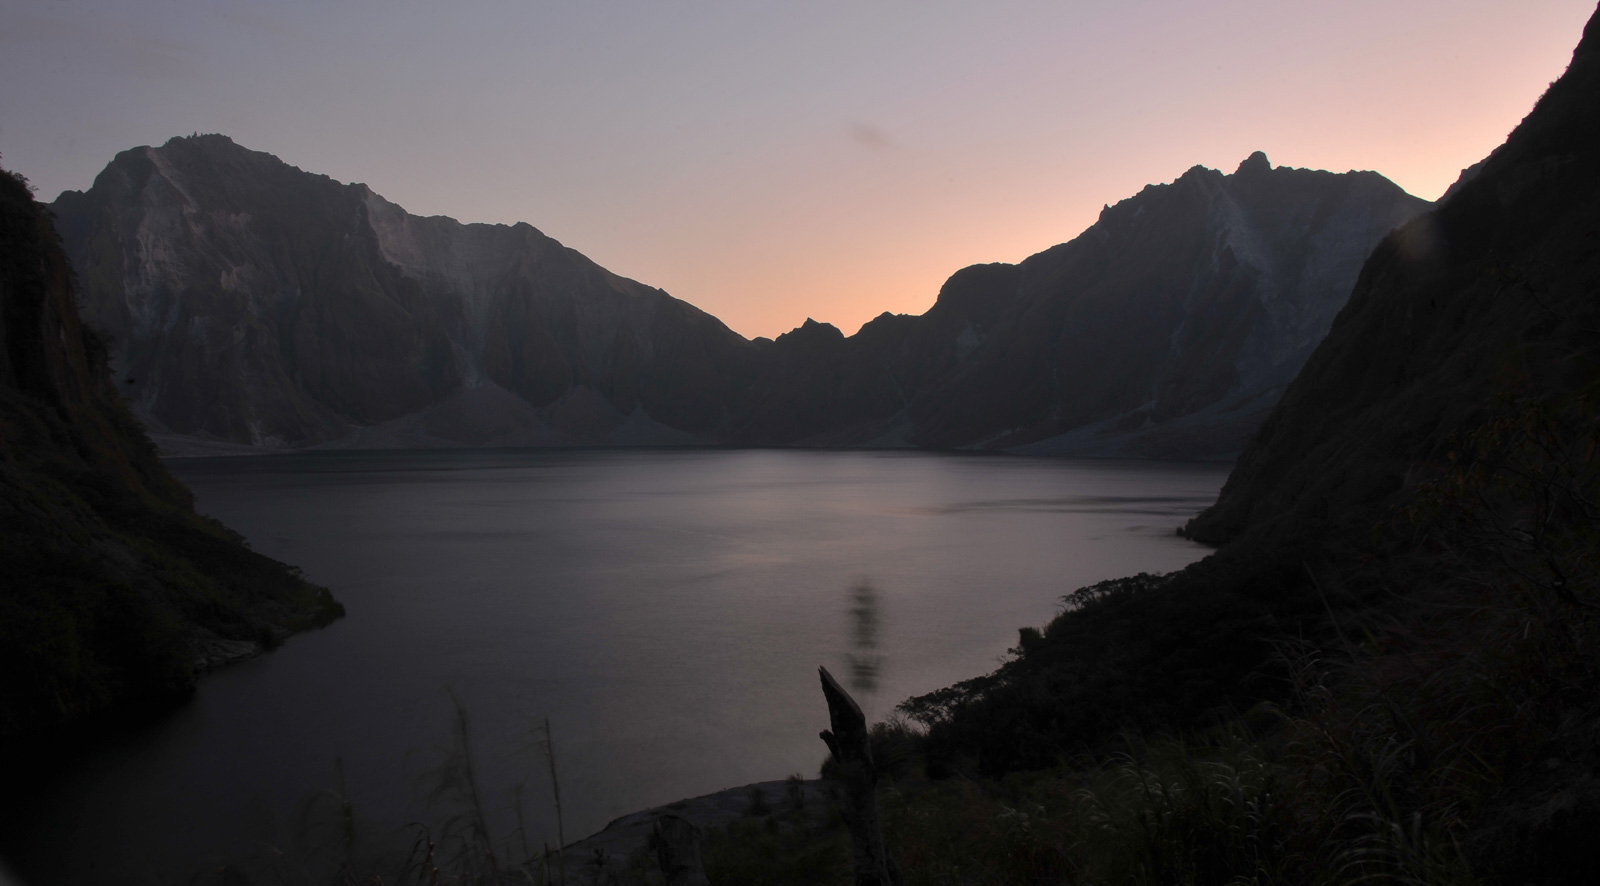 Mount Pinatubo [28 mm, 13.0 sec at f / 22, ISO 100]